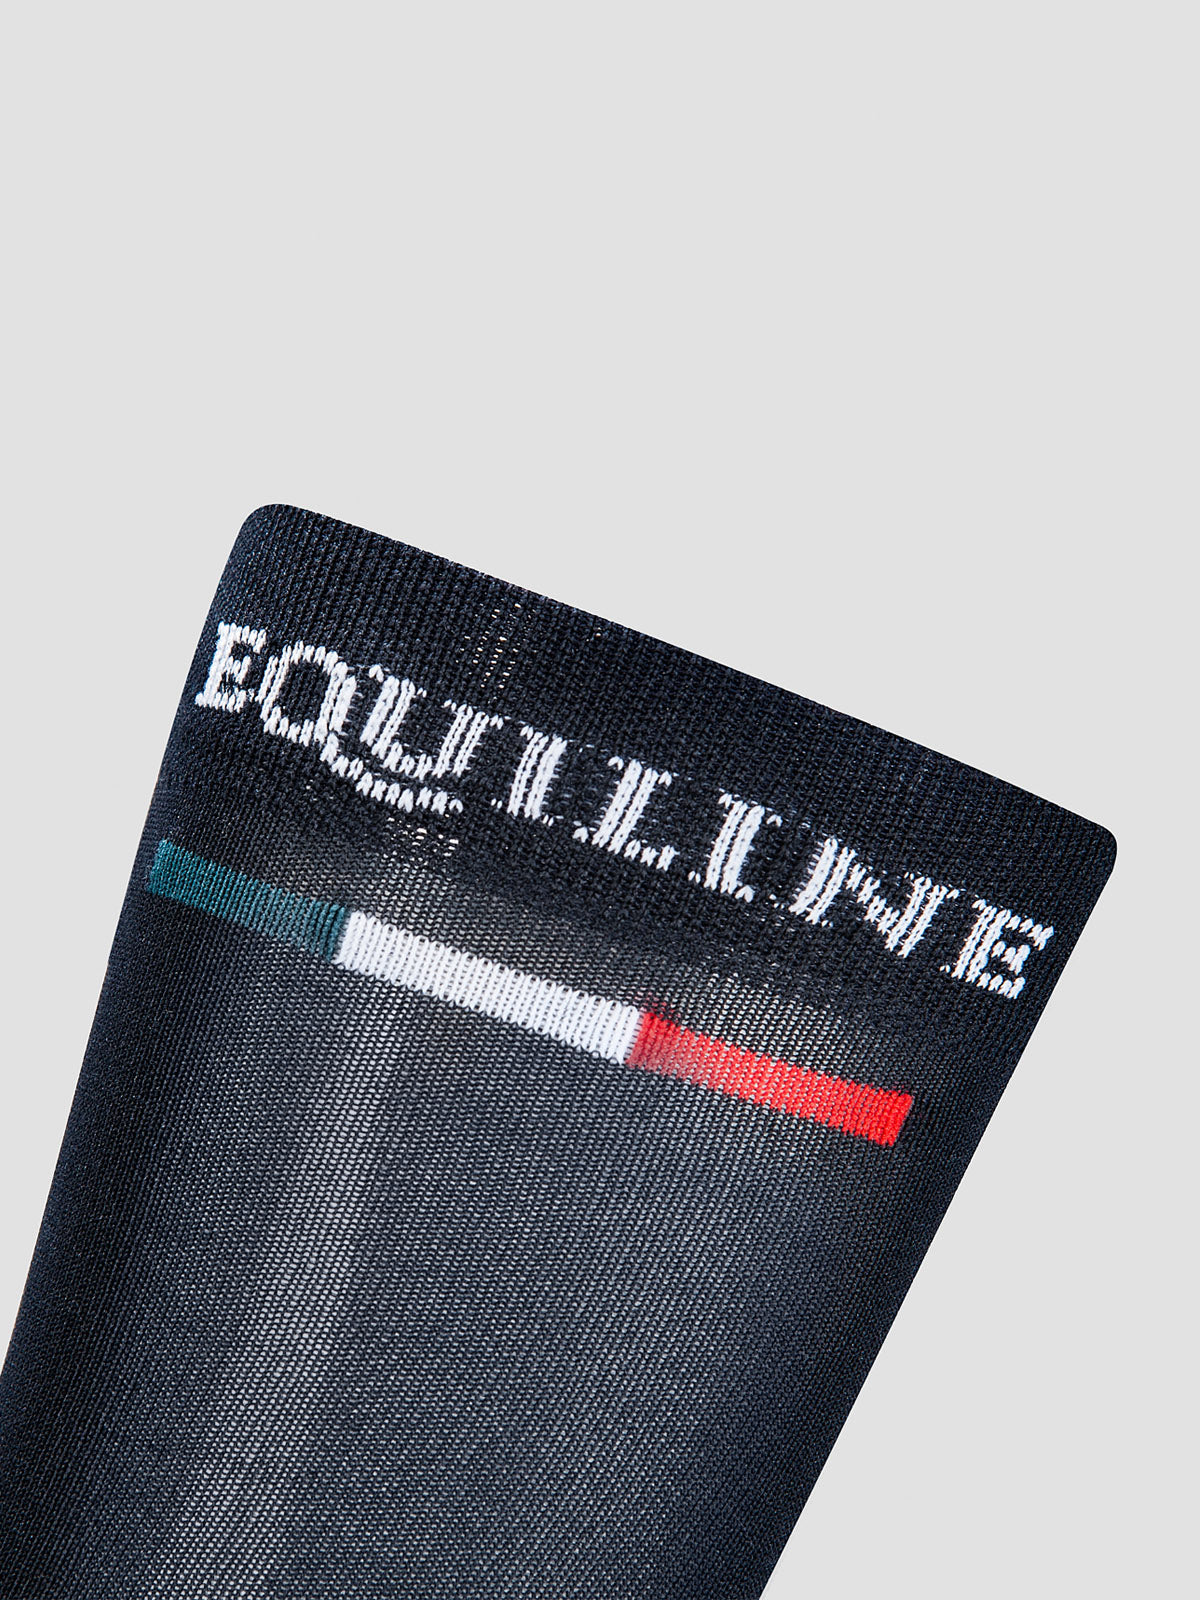 Equiline Silver Plus Light Socks